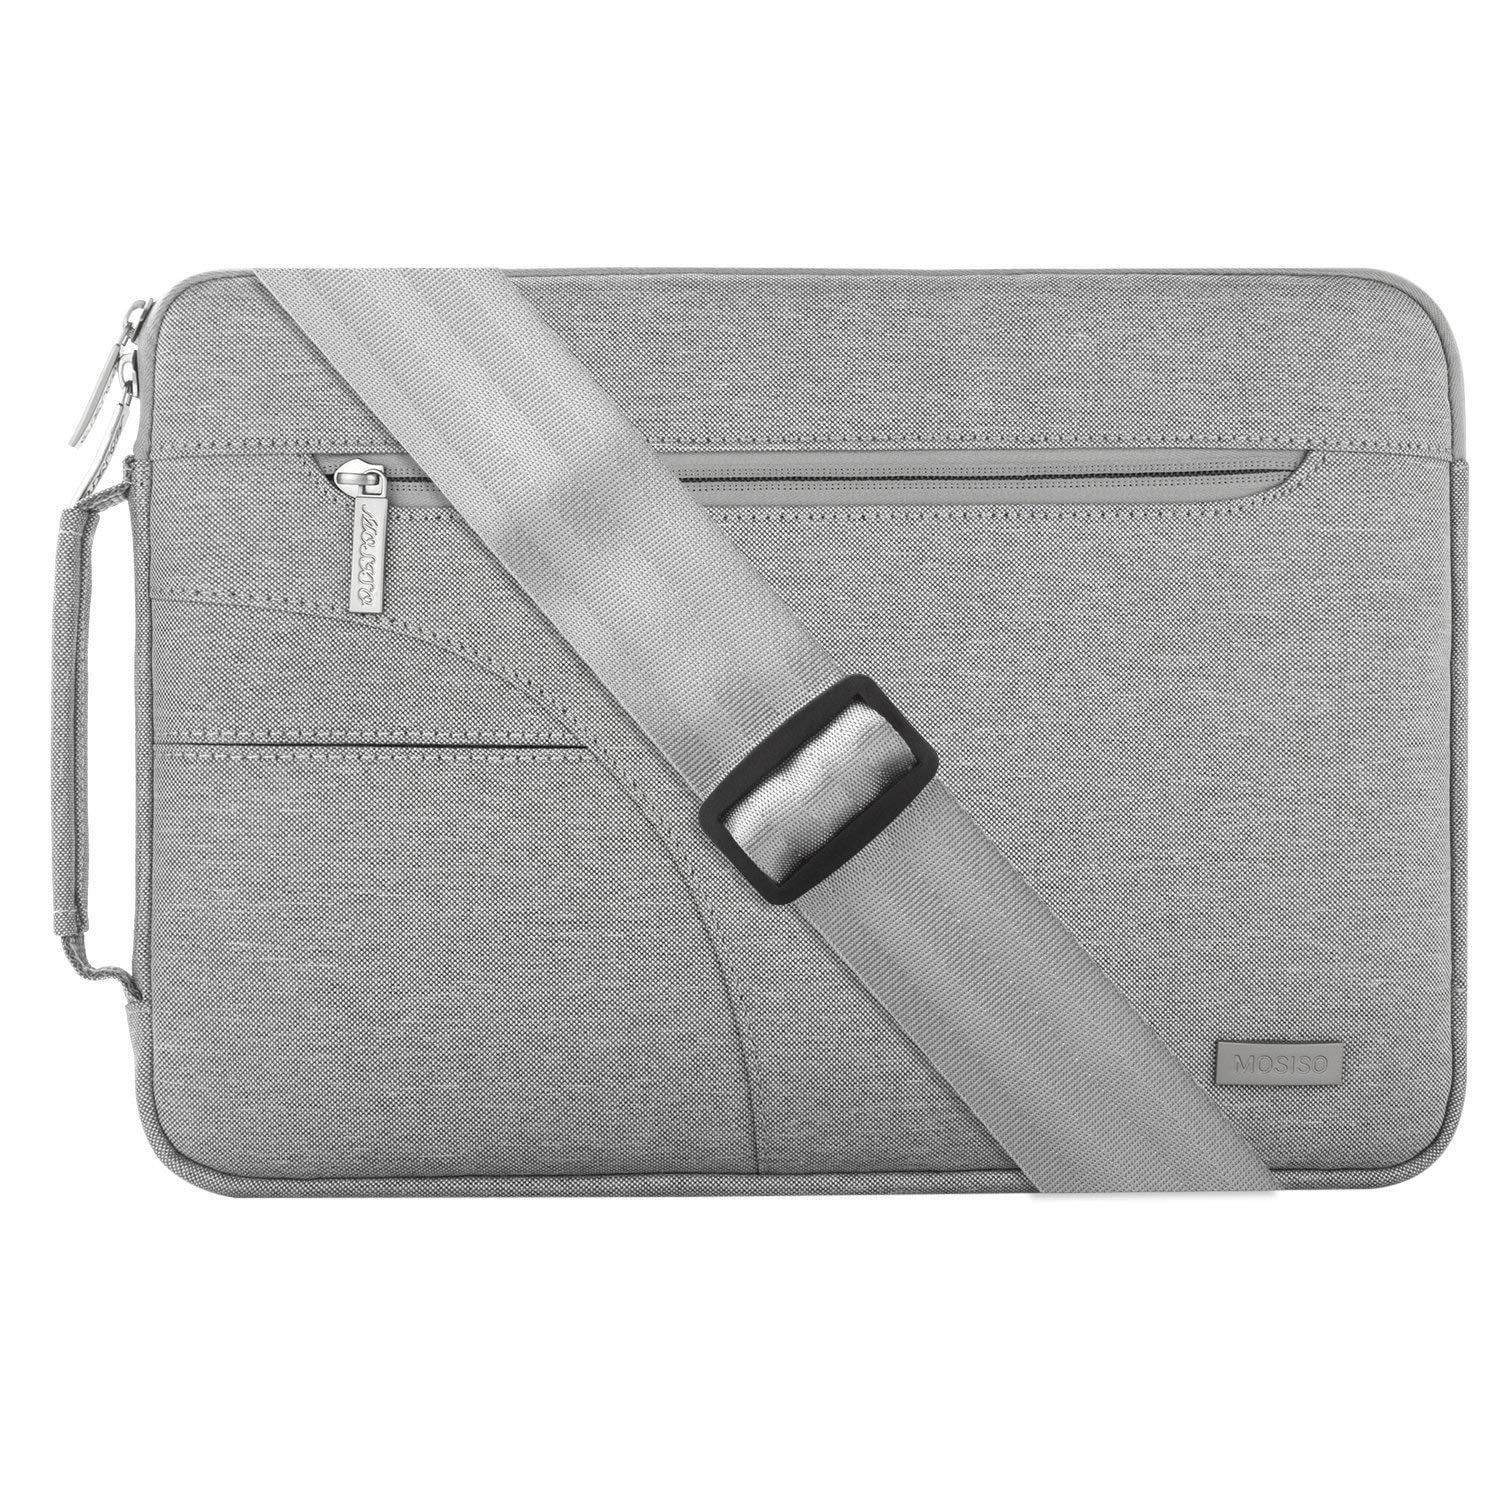 Laptop Sleeve Bag Mario Tablet Briefcase Ultraportable Protective Canvas for 13 Inch MacBook Pro/MacBook Air/Notebook Computer